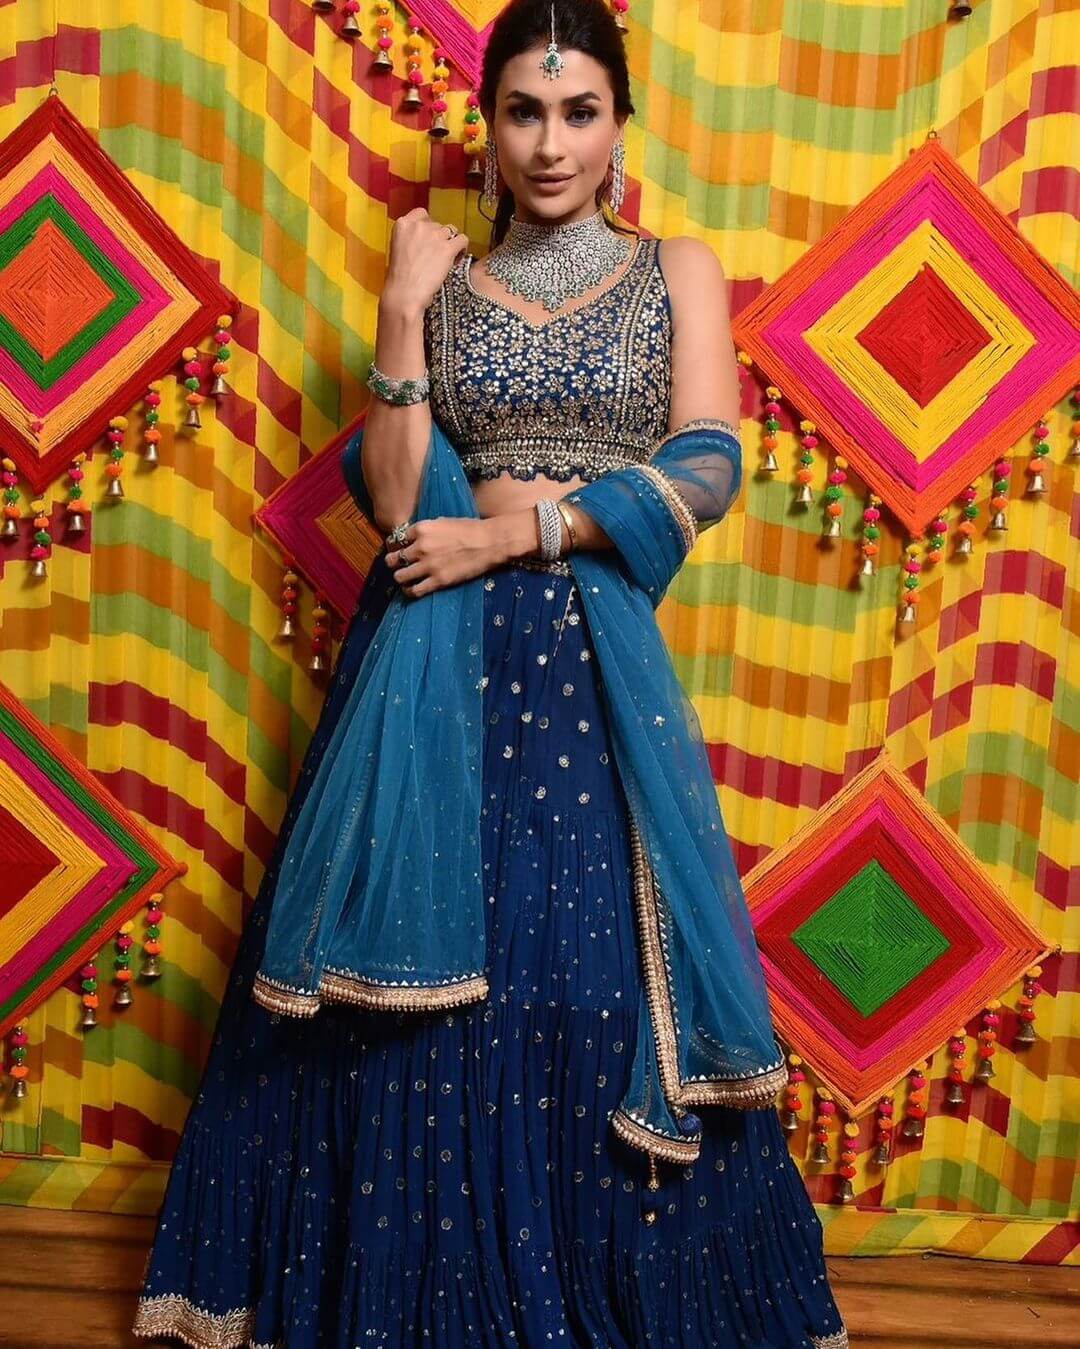 TV Actress Pavitra Punia In Blue Lehenga Choli Gives Us Major Wedding Look Inspo